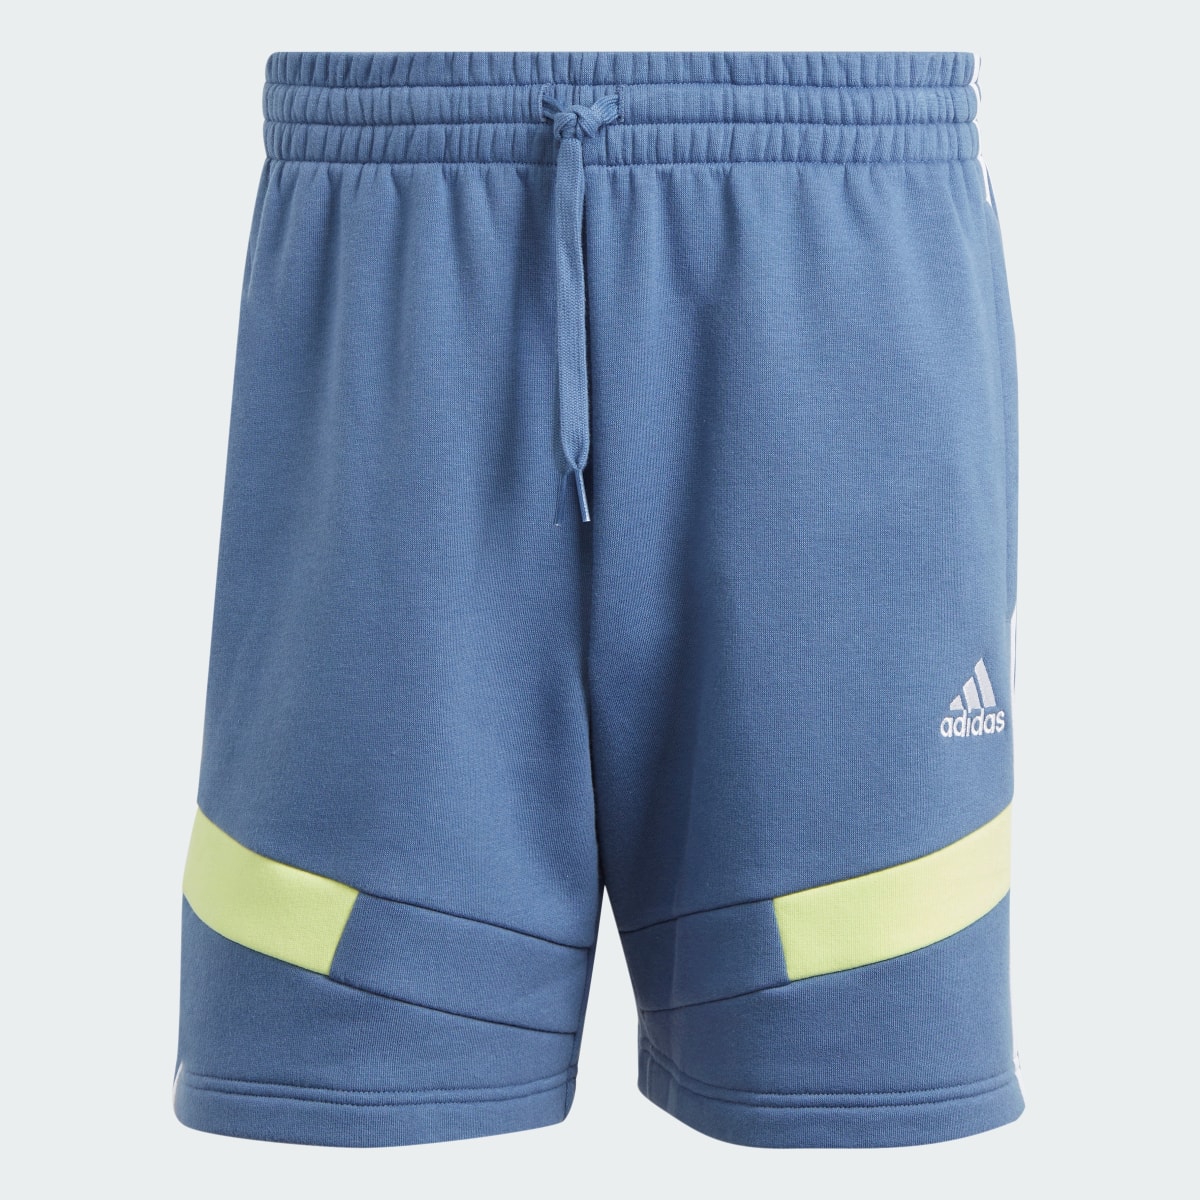 Adidas Colourblock Shorts. 4